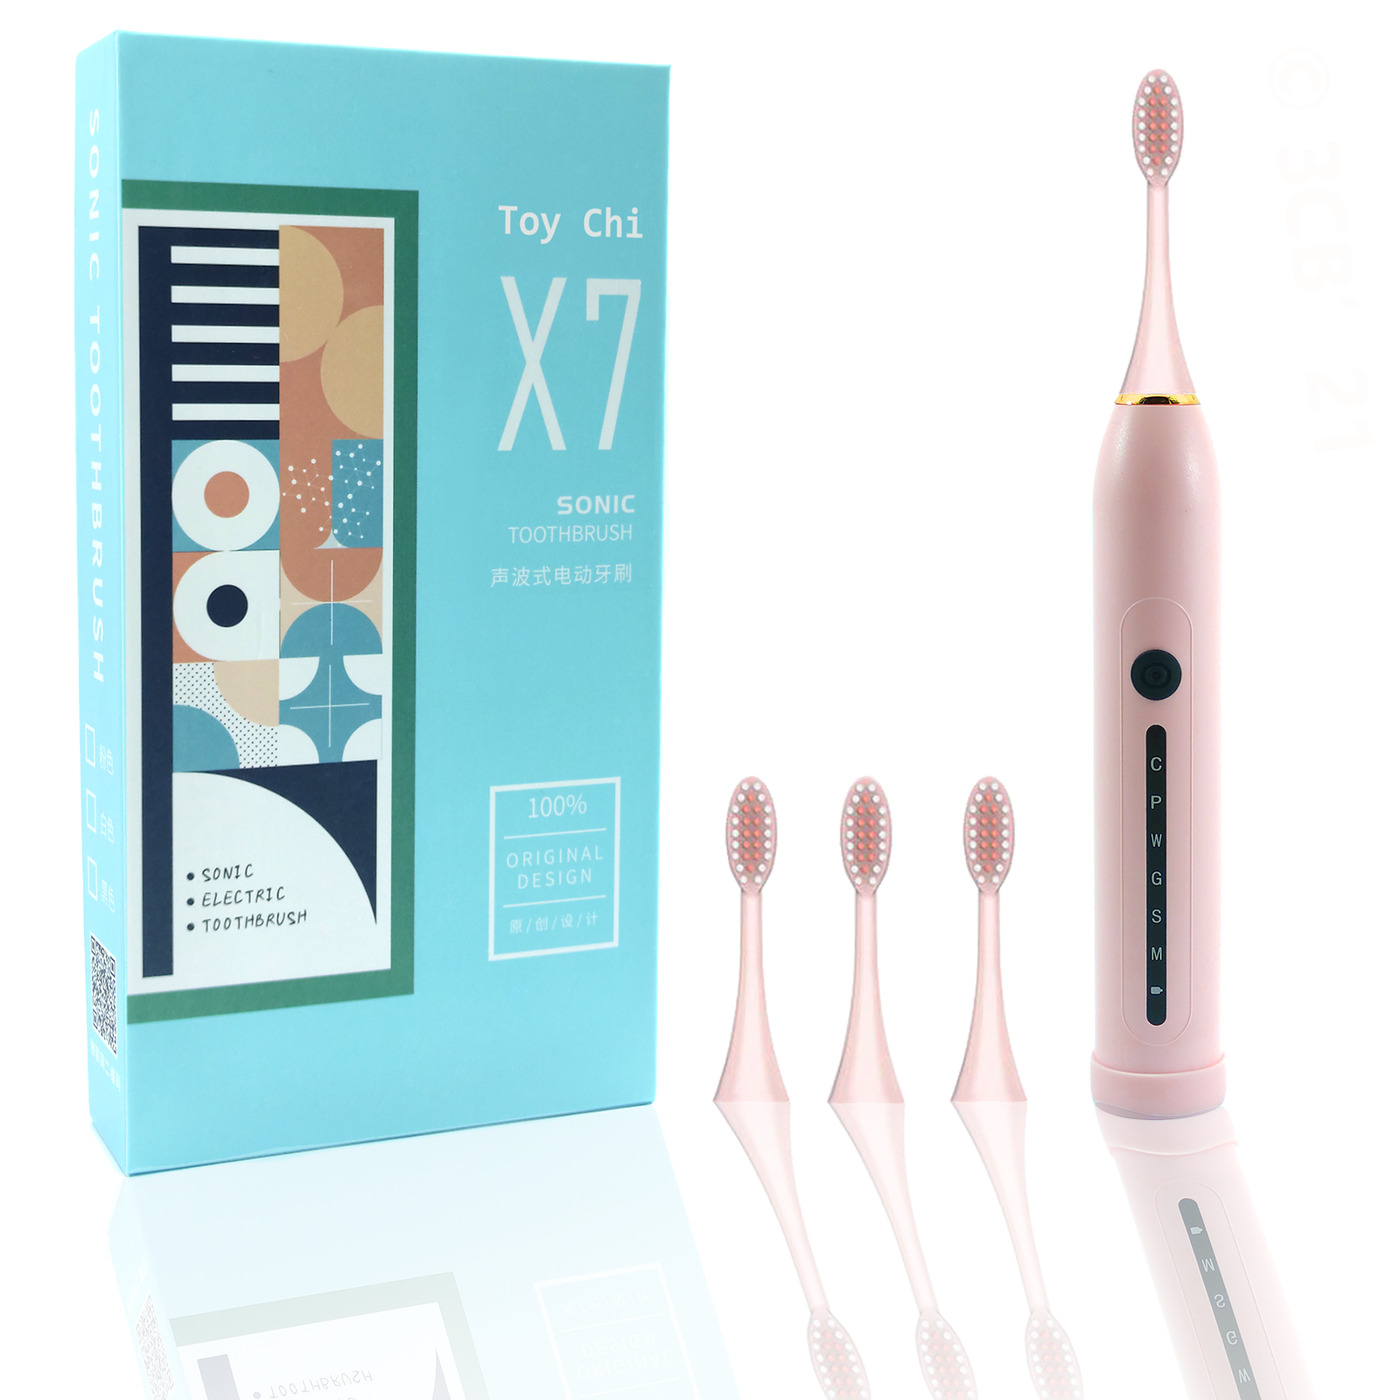 Электрическая зубная щетка ультразвуковая Toy Chi X7 SONIC Toothbrush, розовая электрическая зубная щетка xiaomi mijia ultrasonic toothbrush white